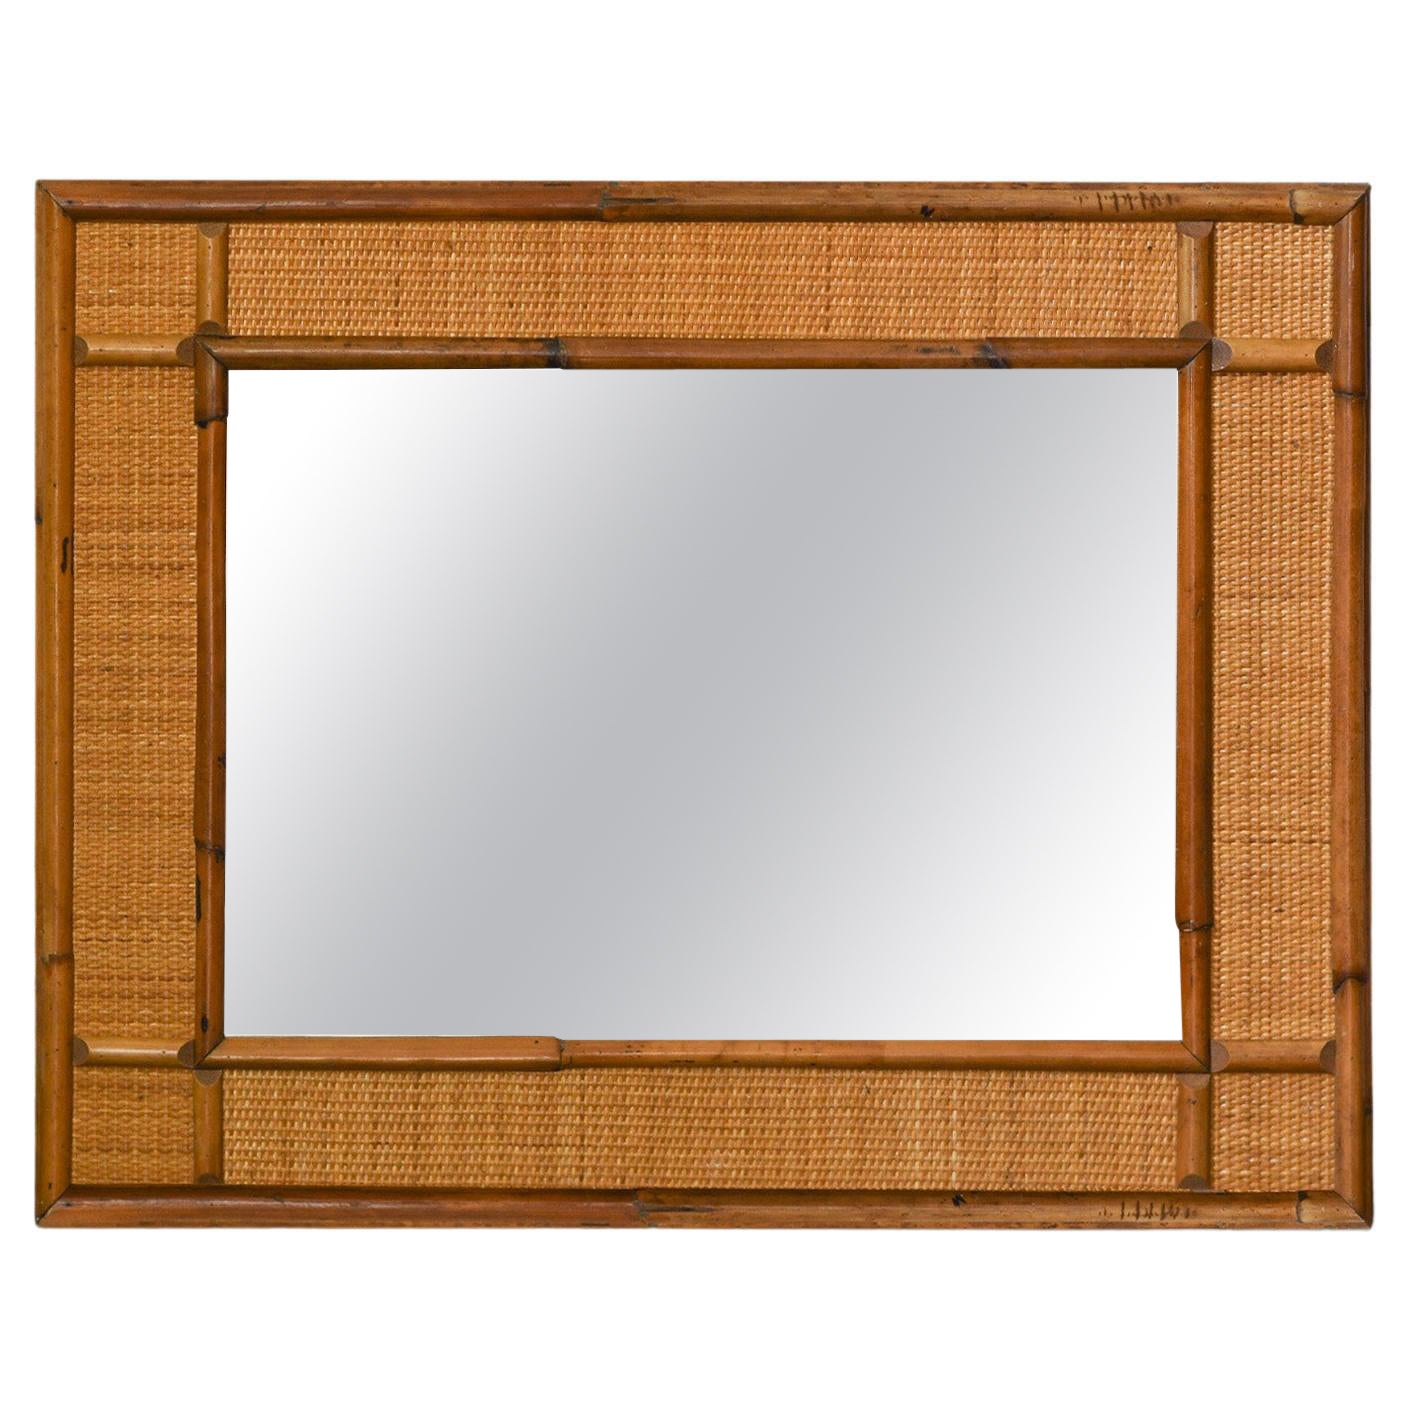 Rectangular mirror in bamboo and wicker 1980